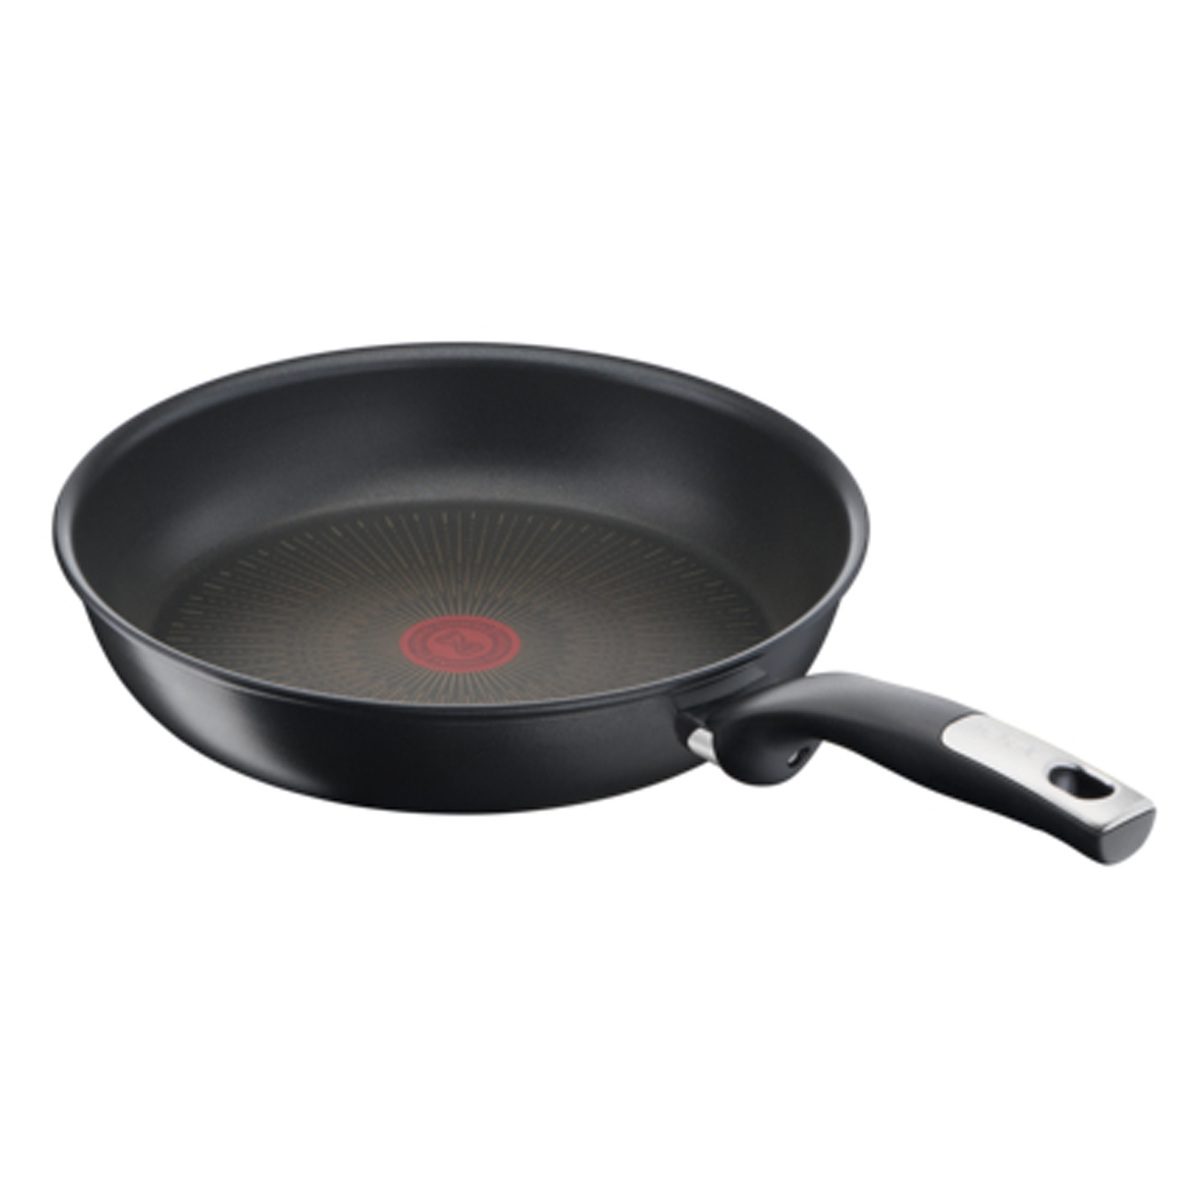 Tefal Unlimited Frying Pan, 28 cm, Black, G2550602